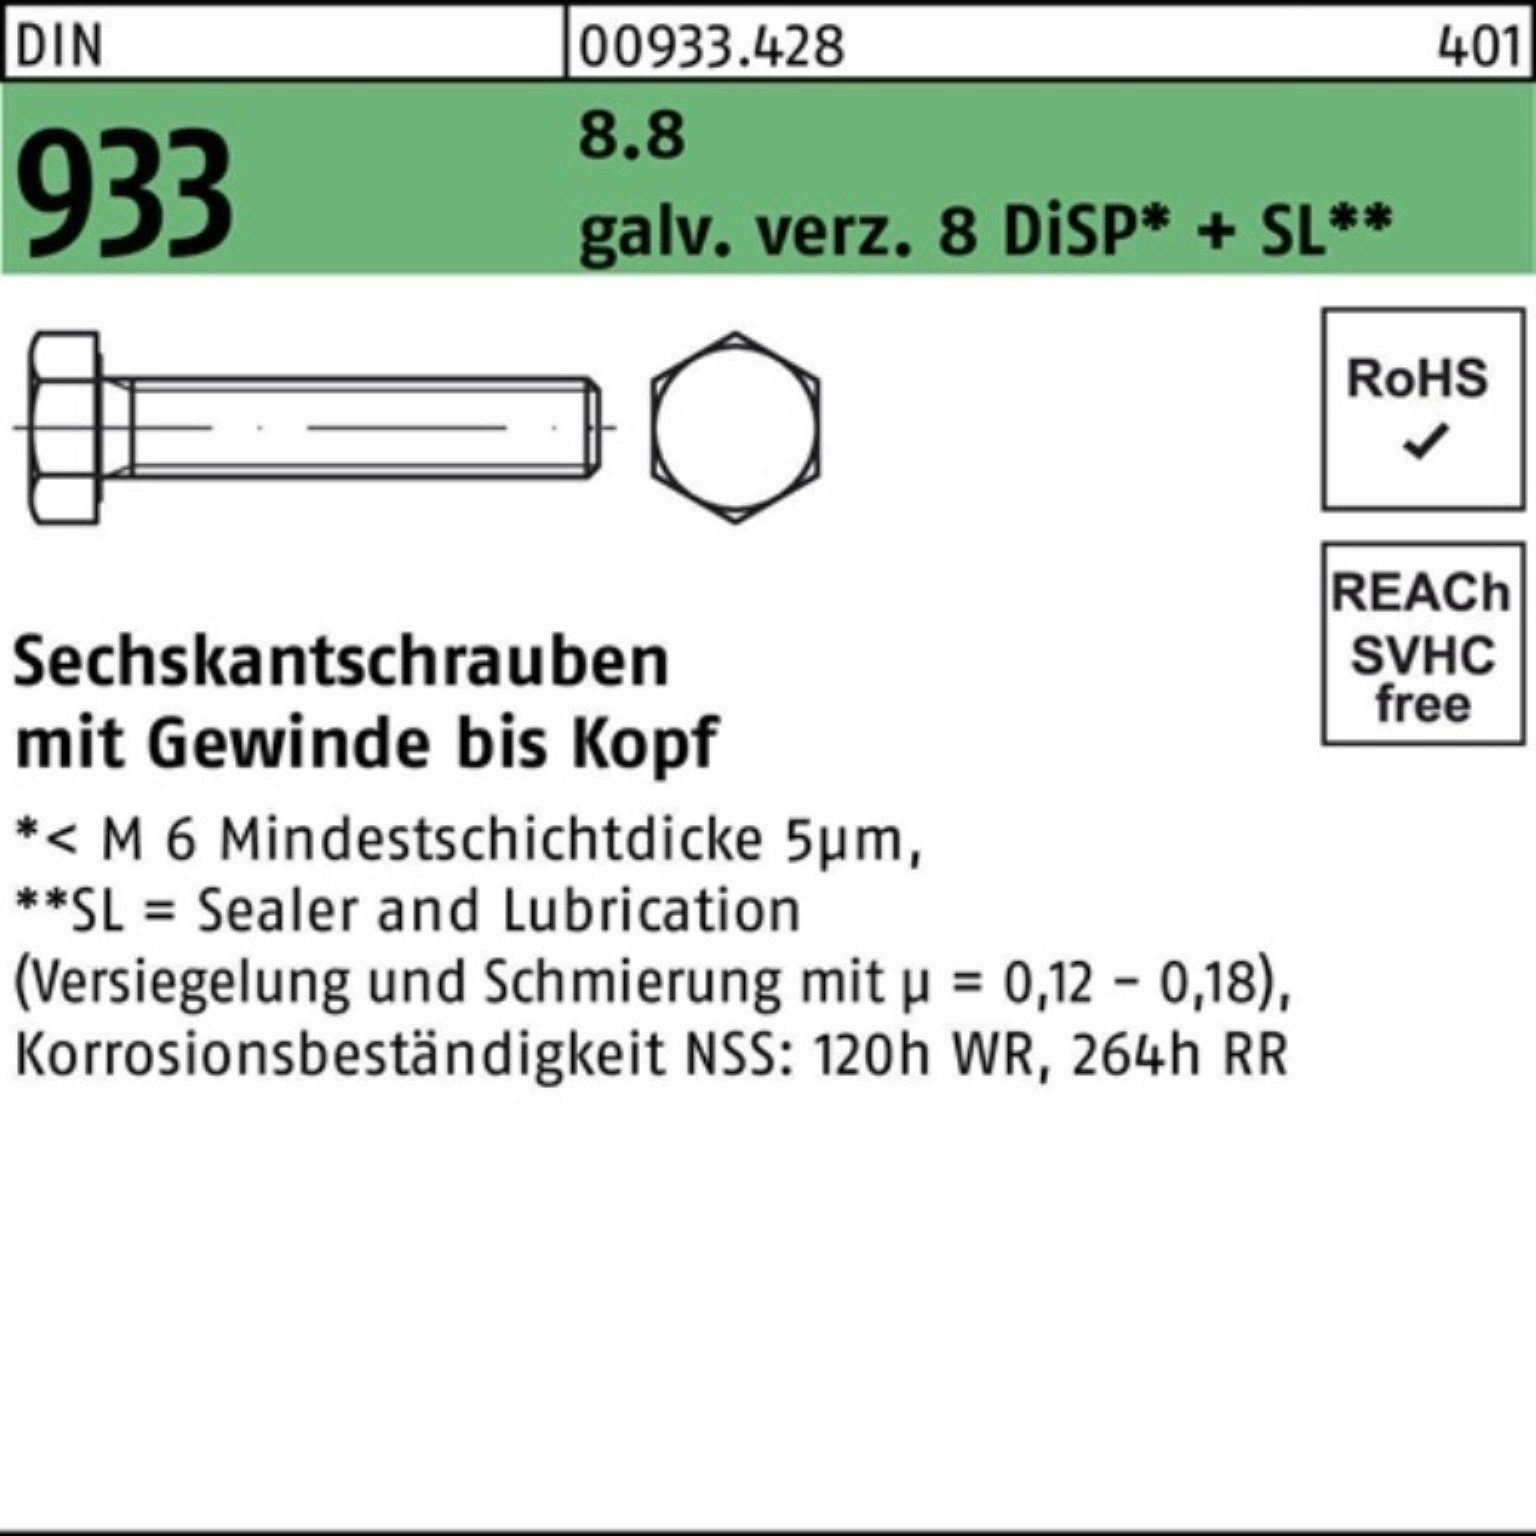 Reyher Sechskantschraube 100er Pack Sechskantschraube DIN 933 VG M16x 45 8.8 gal Zn 8 DiSP + SL